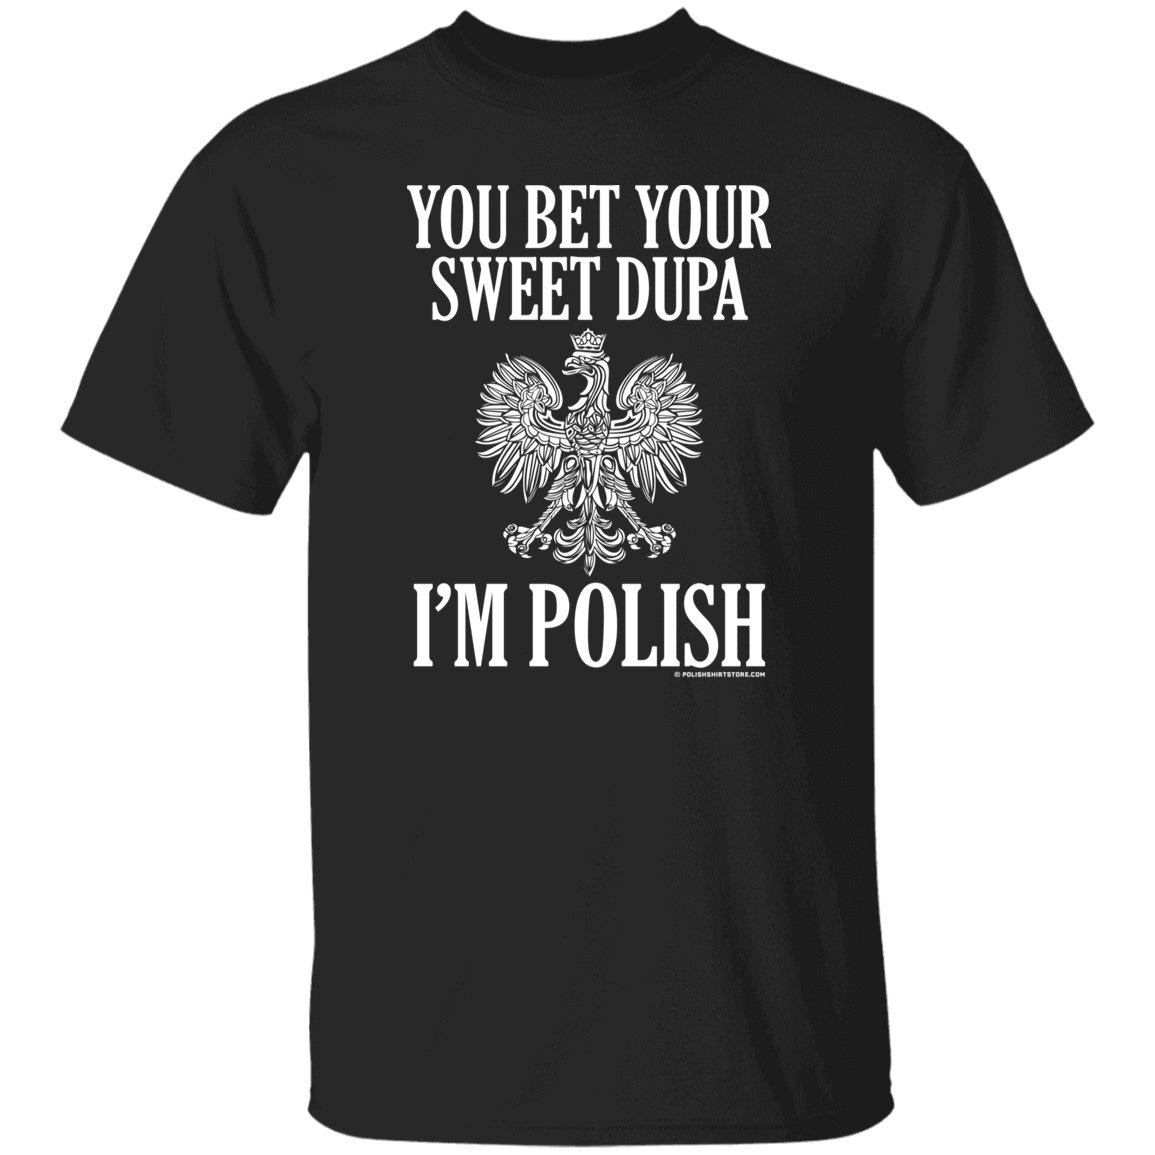 You Bet Your Sweet Dupa I'm Polish Apparel CustomCat G500 5.3 oz. T-Shirt Black S